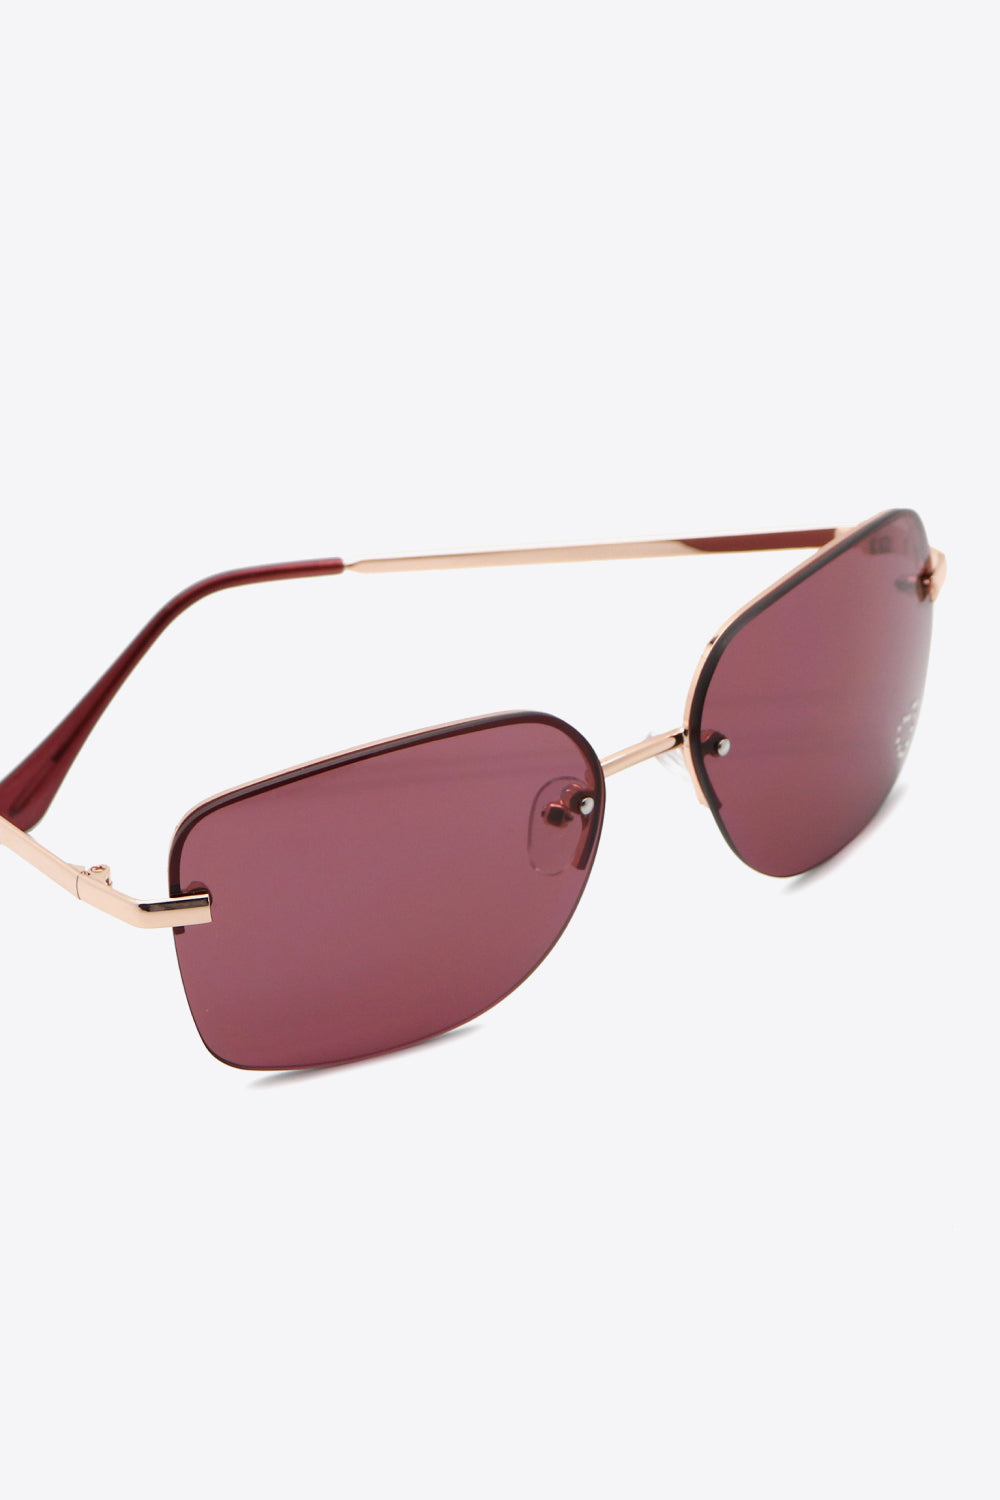 Rhinestone Heart Metal Frame Sunglasses - Sunglasses - FITGGINS